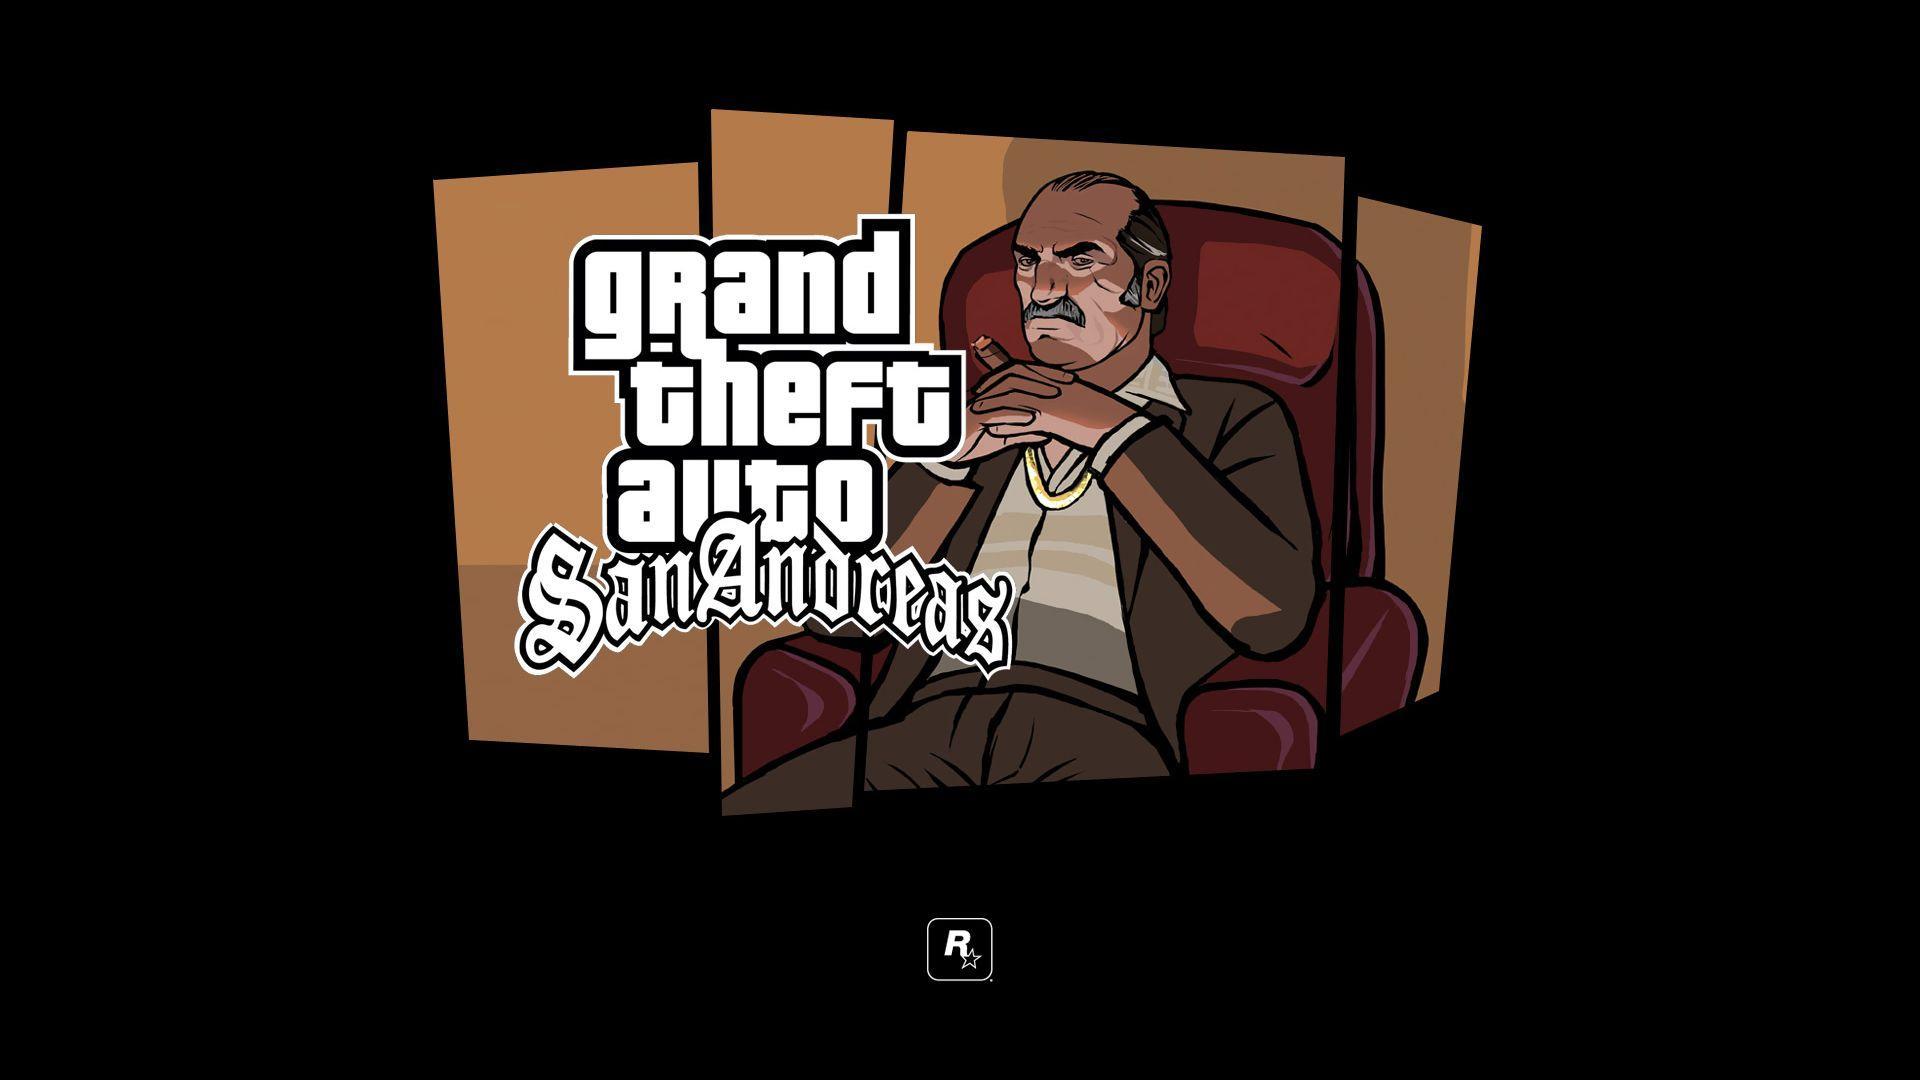 Grand Theft Auto San Andreas Full Hd Wallpaper 4k